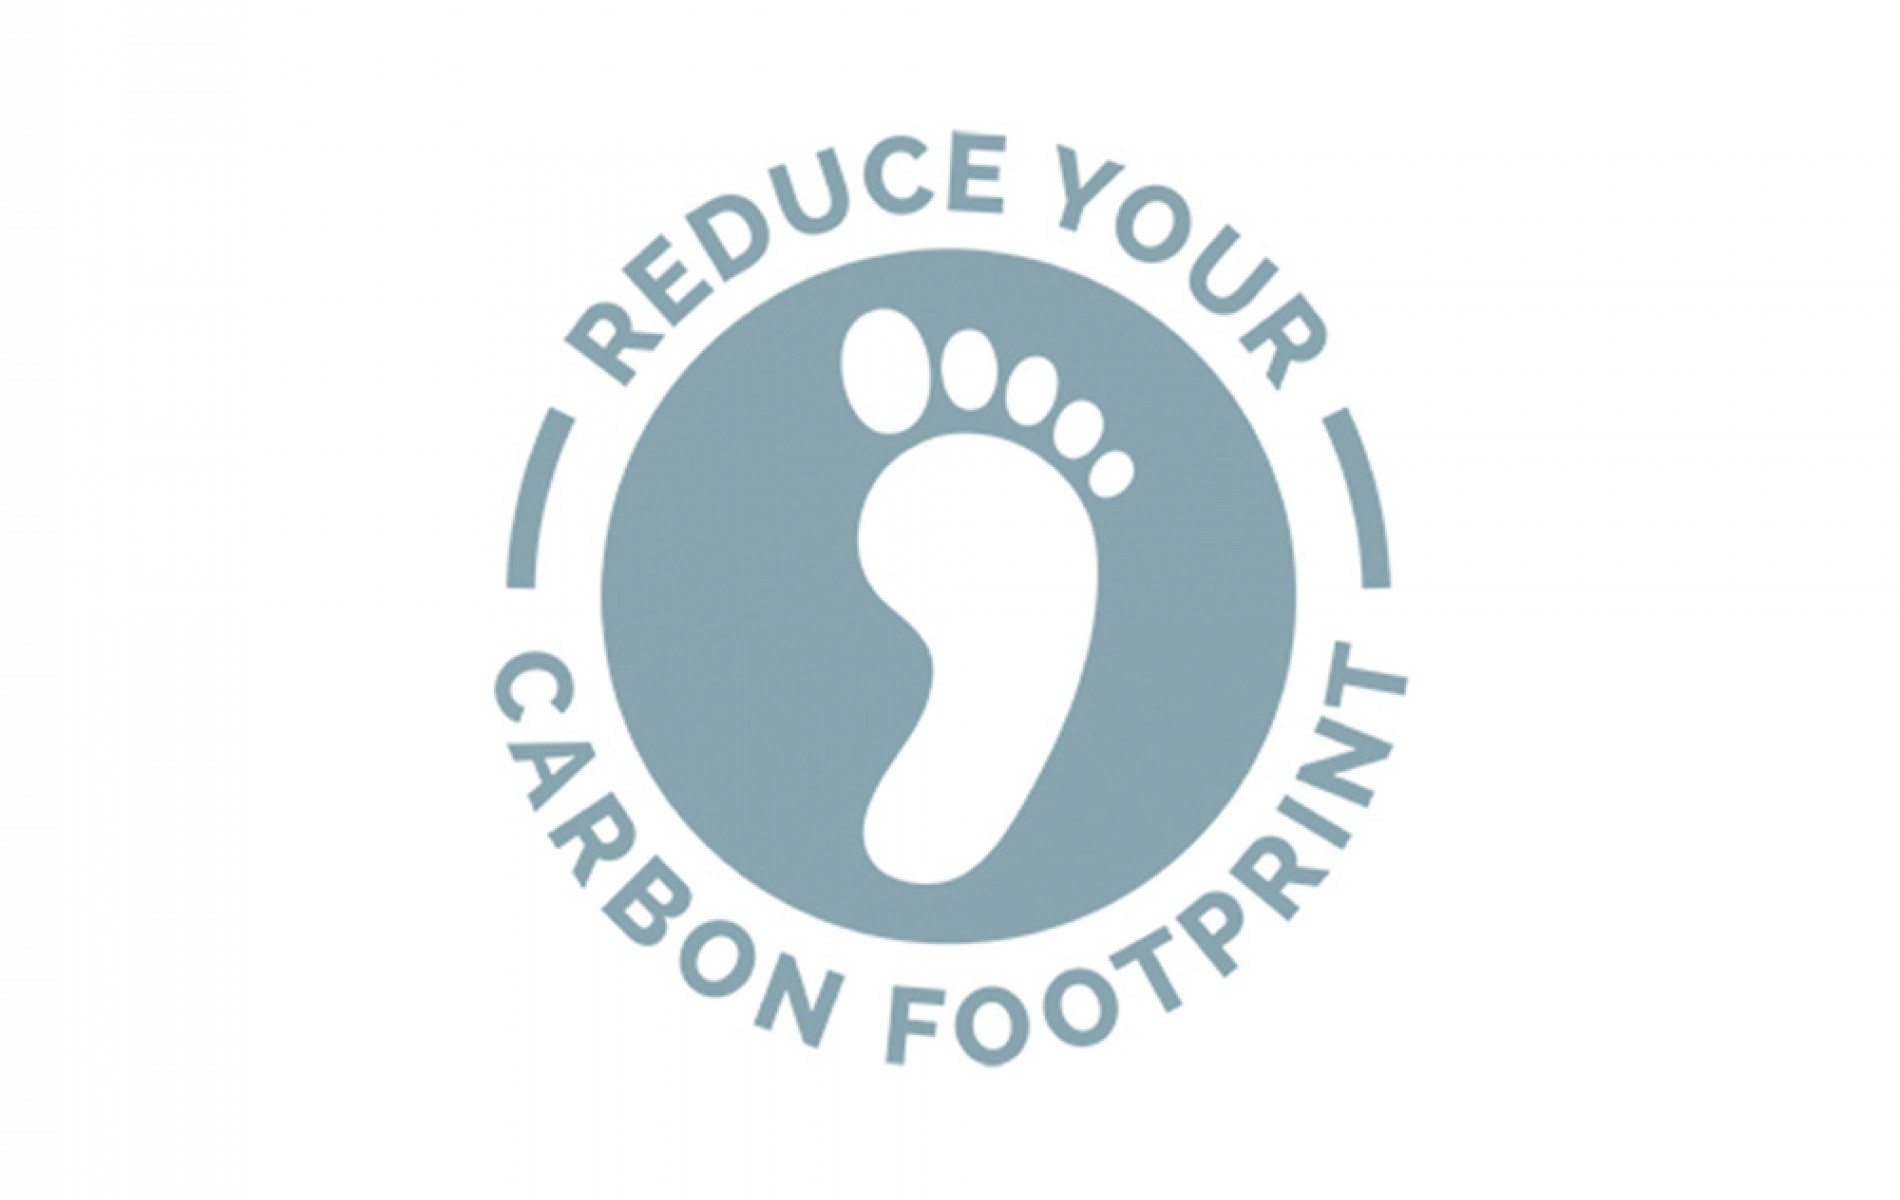 News Carbon Footprint